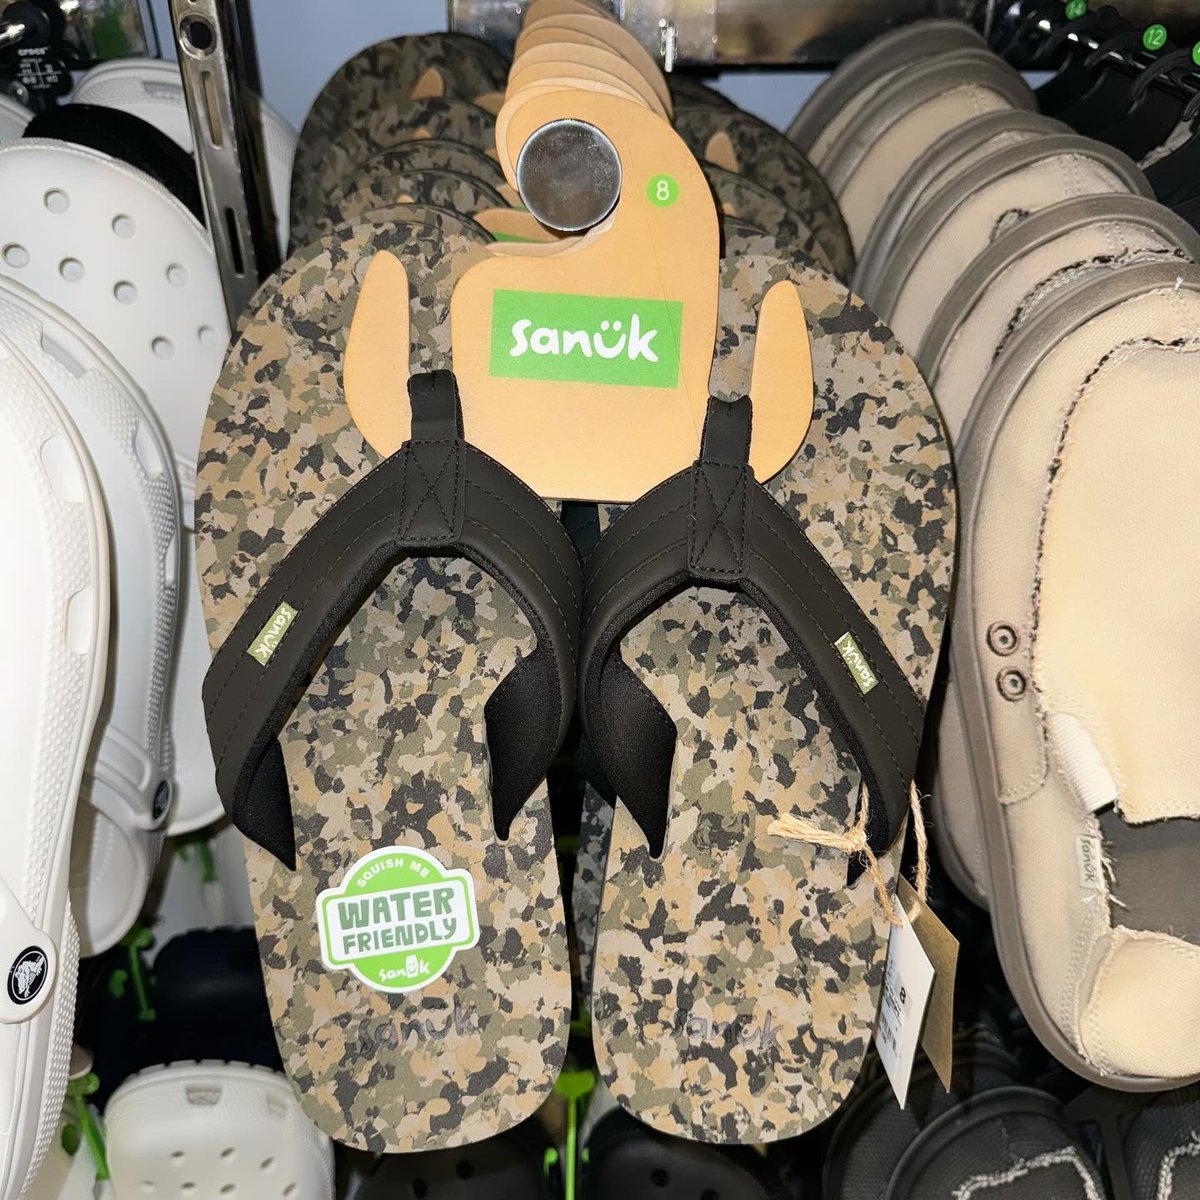 New @SanukFootwear sandals in stock! 🩴 #sanuk #flipflops #flipflopshops #thestrip #Mandalaybay #vegas #lasvegas #ffs #casino #freeyourtoes #Mall #TheShoppes